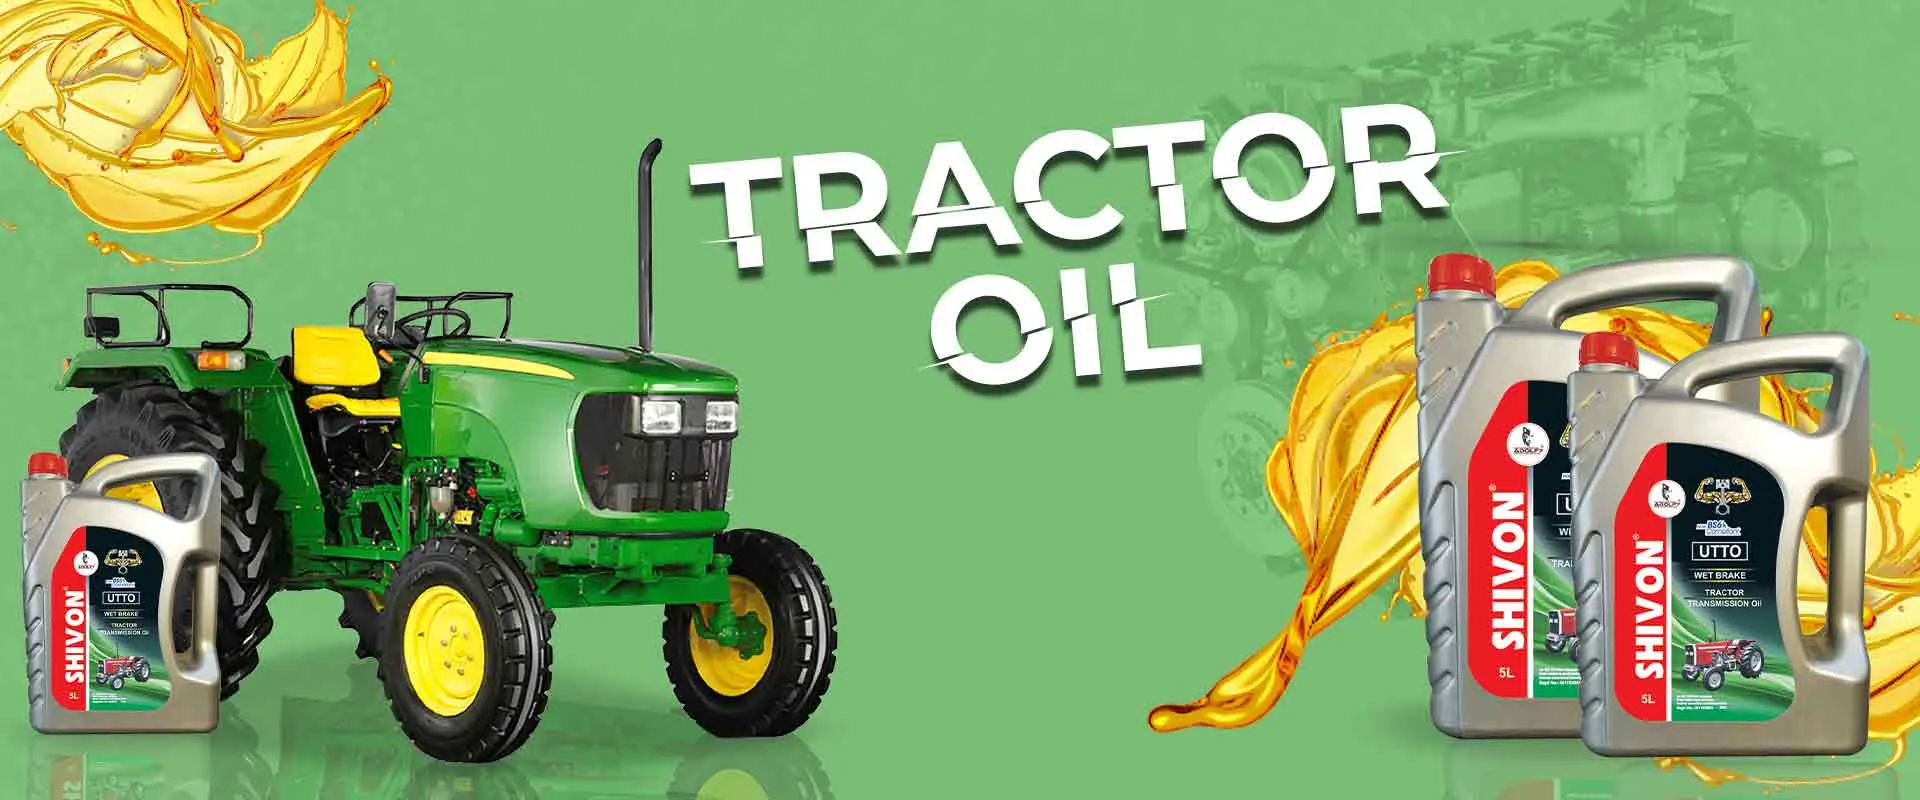 Tractor Oil In Nooan